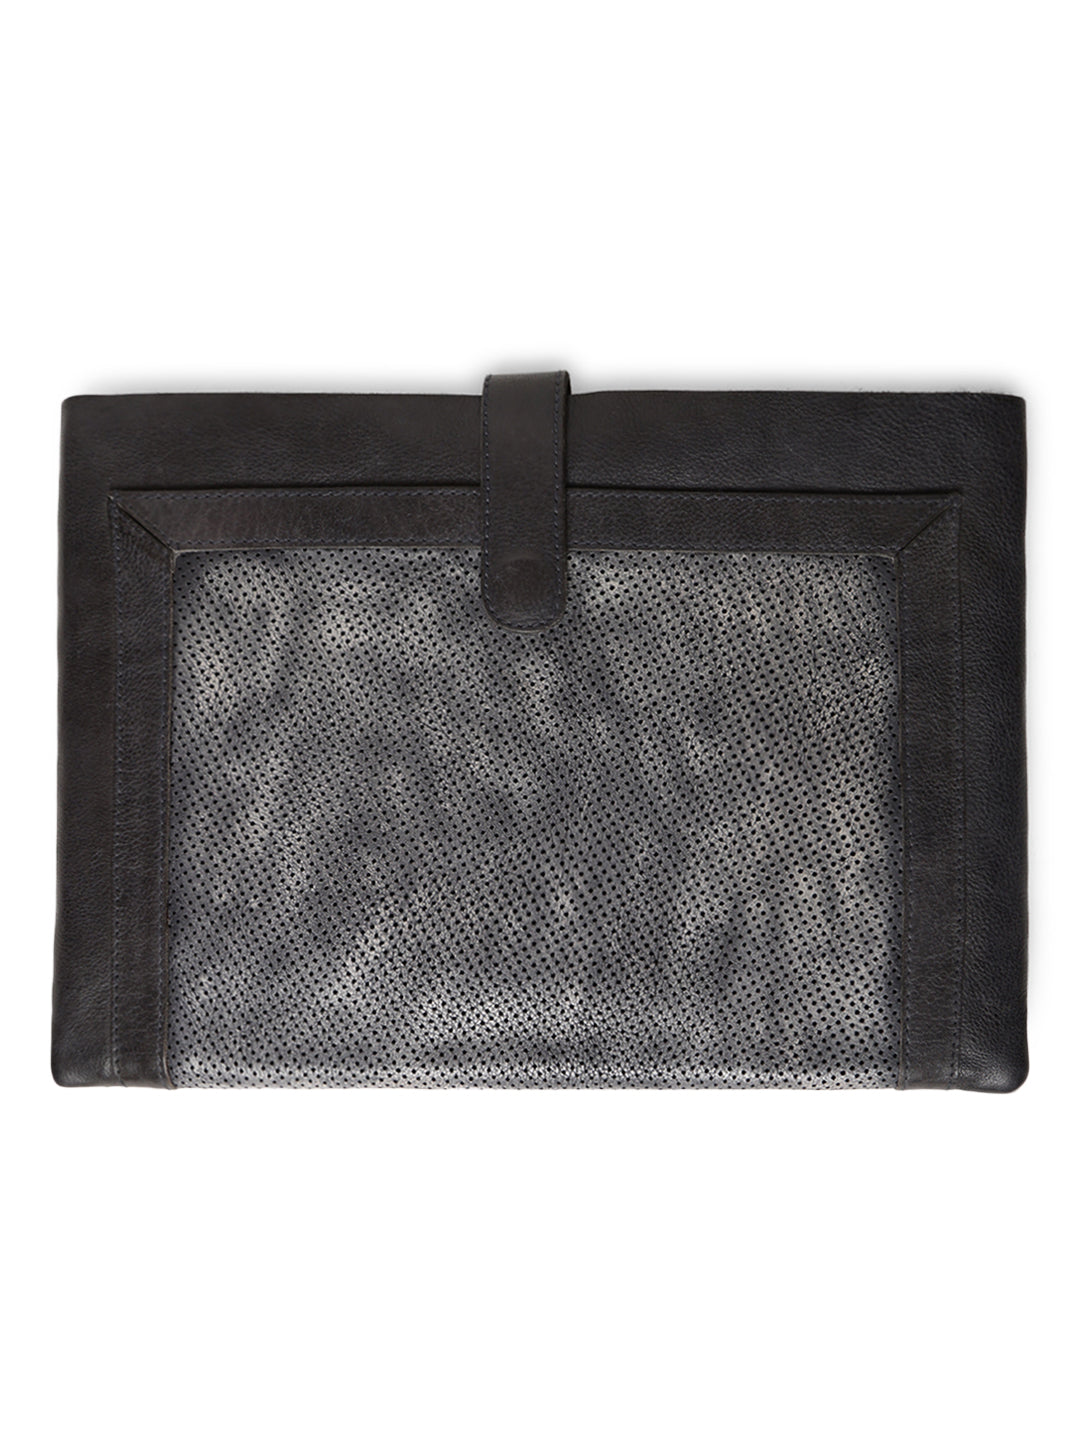 EleganceWrap Black Leather Laptop Cases